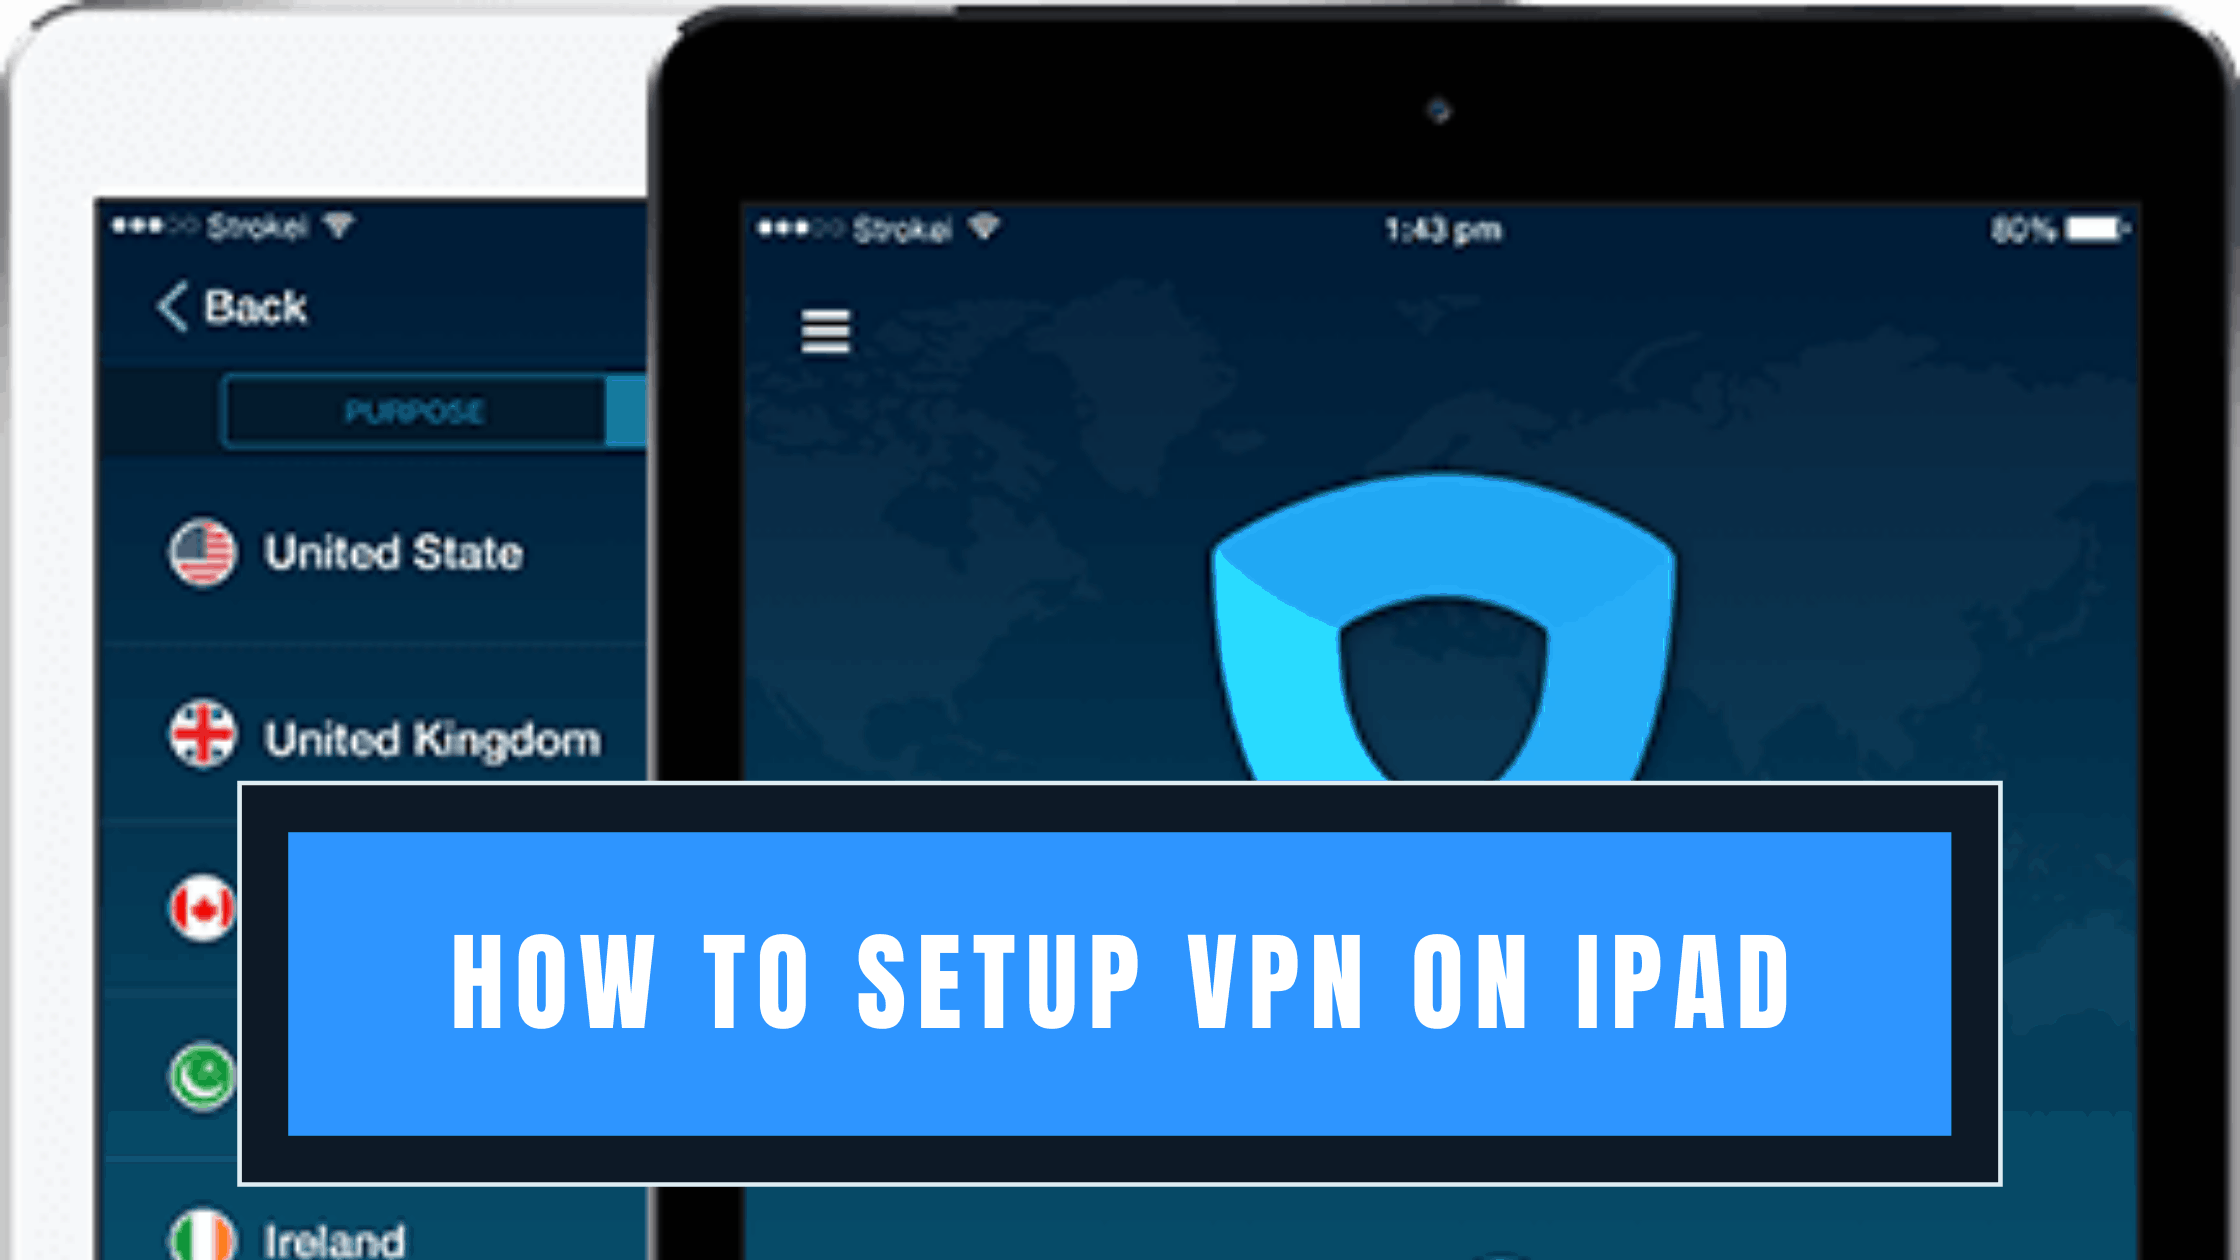 HOW TO SETUP VPN ON IPAD